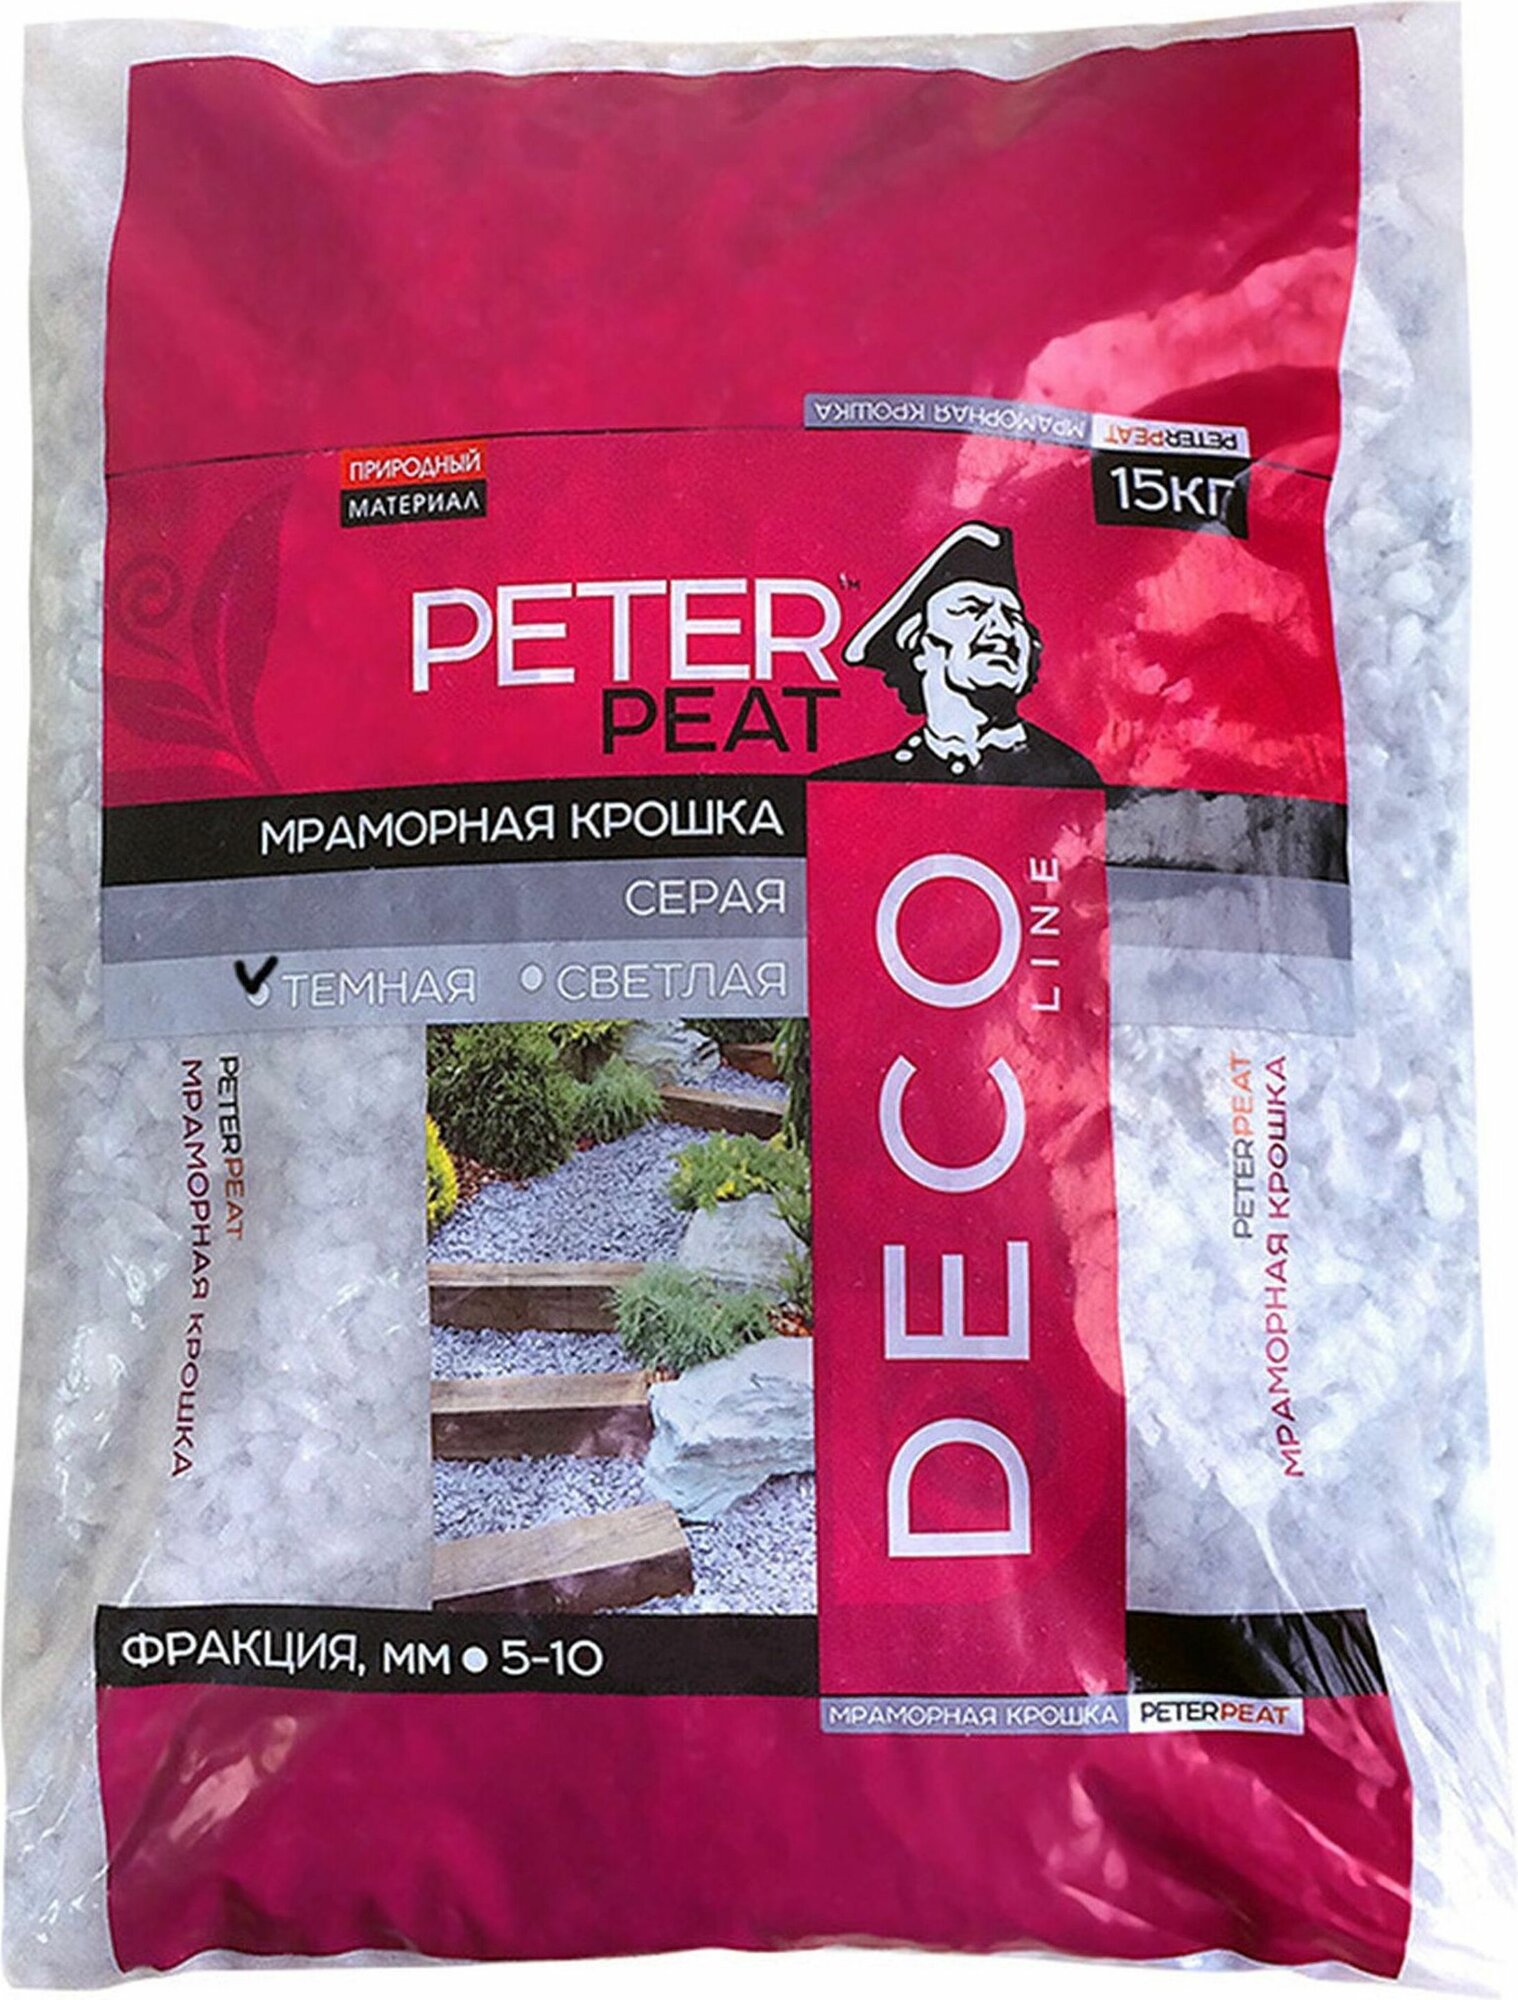 Мраморная крошка Peter Peat Deco 5-10 мм светло-серая 15 кг